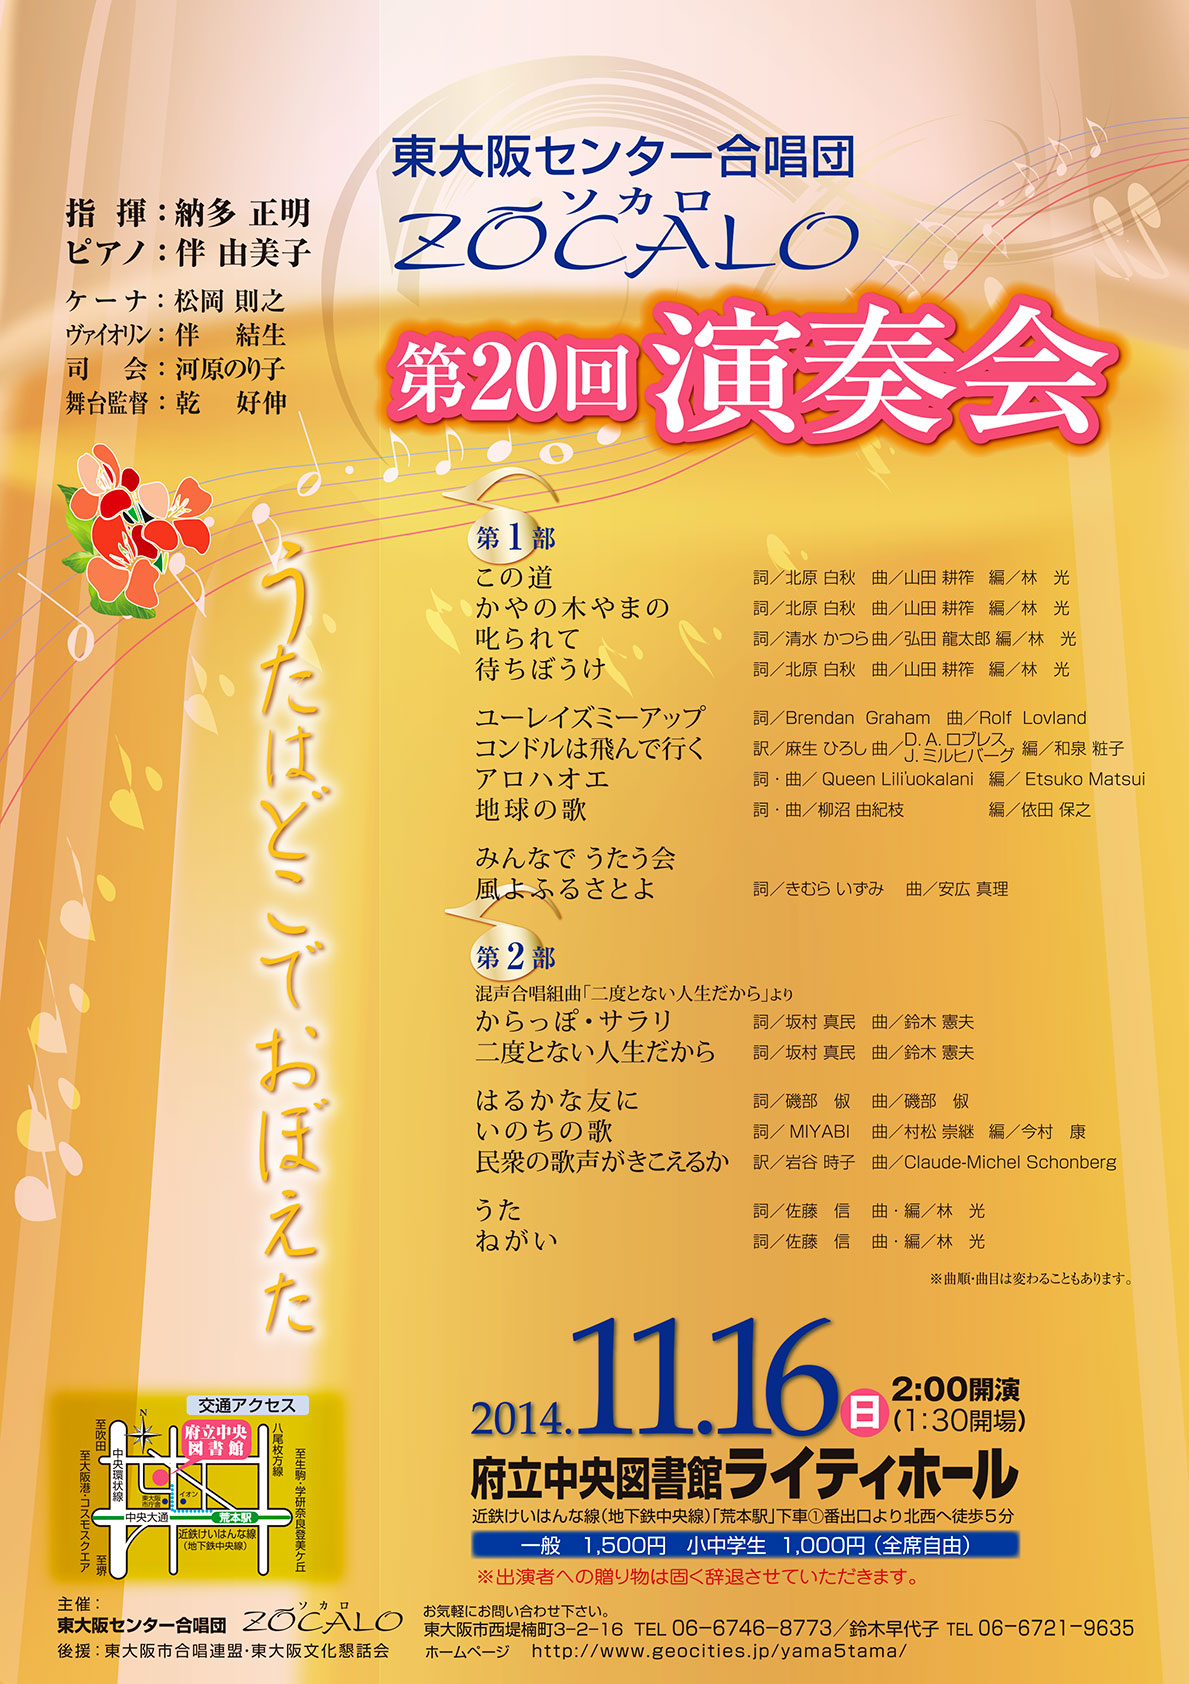 20th東大阪センター合唱団ソカロ演奏会